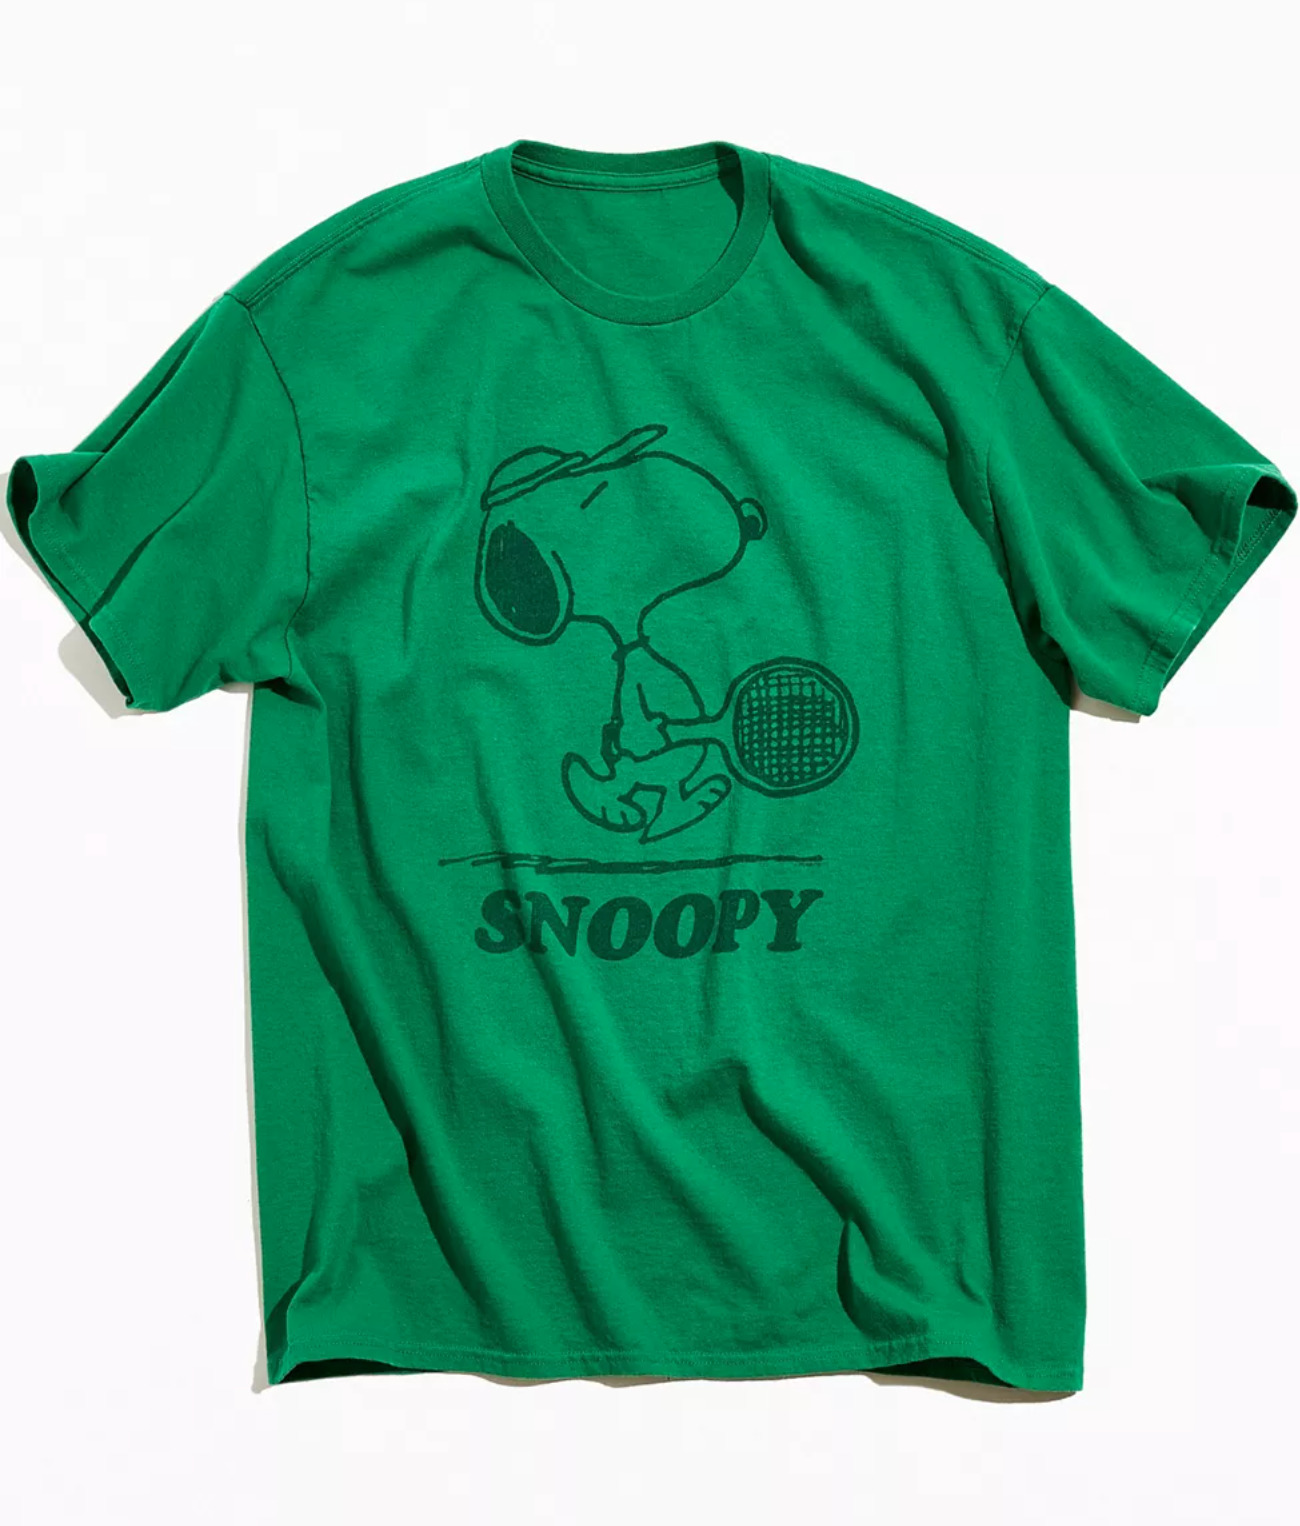 Snoopy Peanuts Tennis Shirt Green